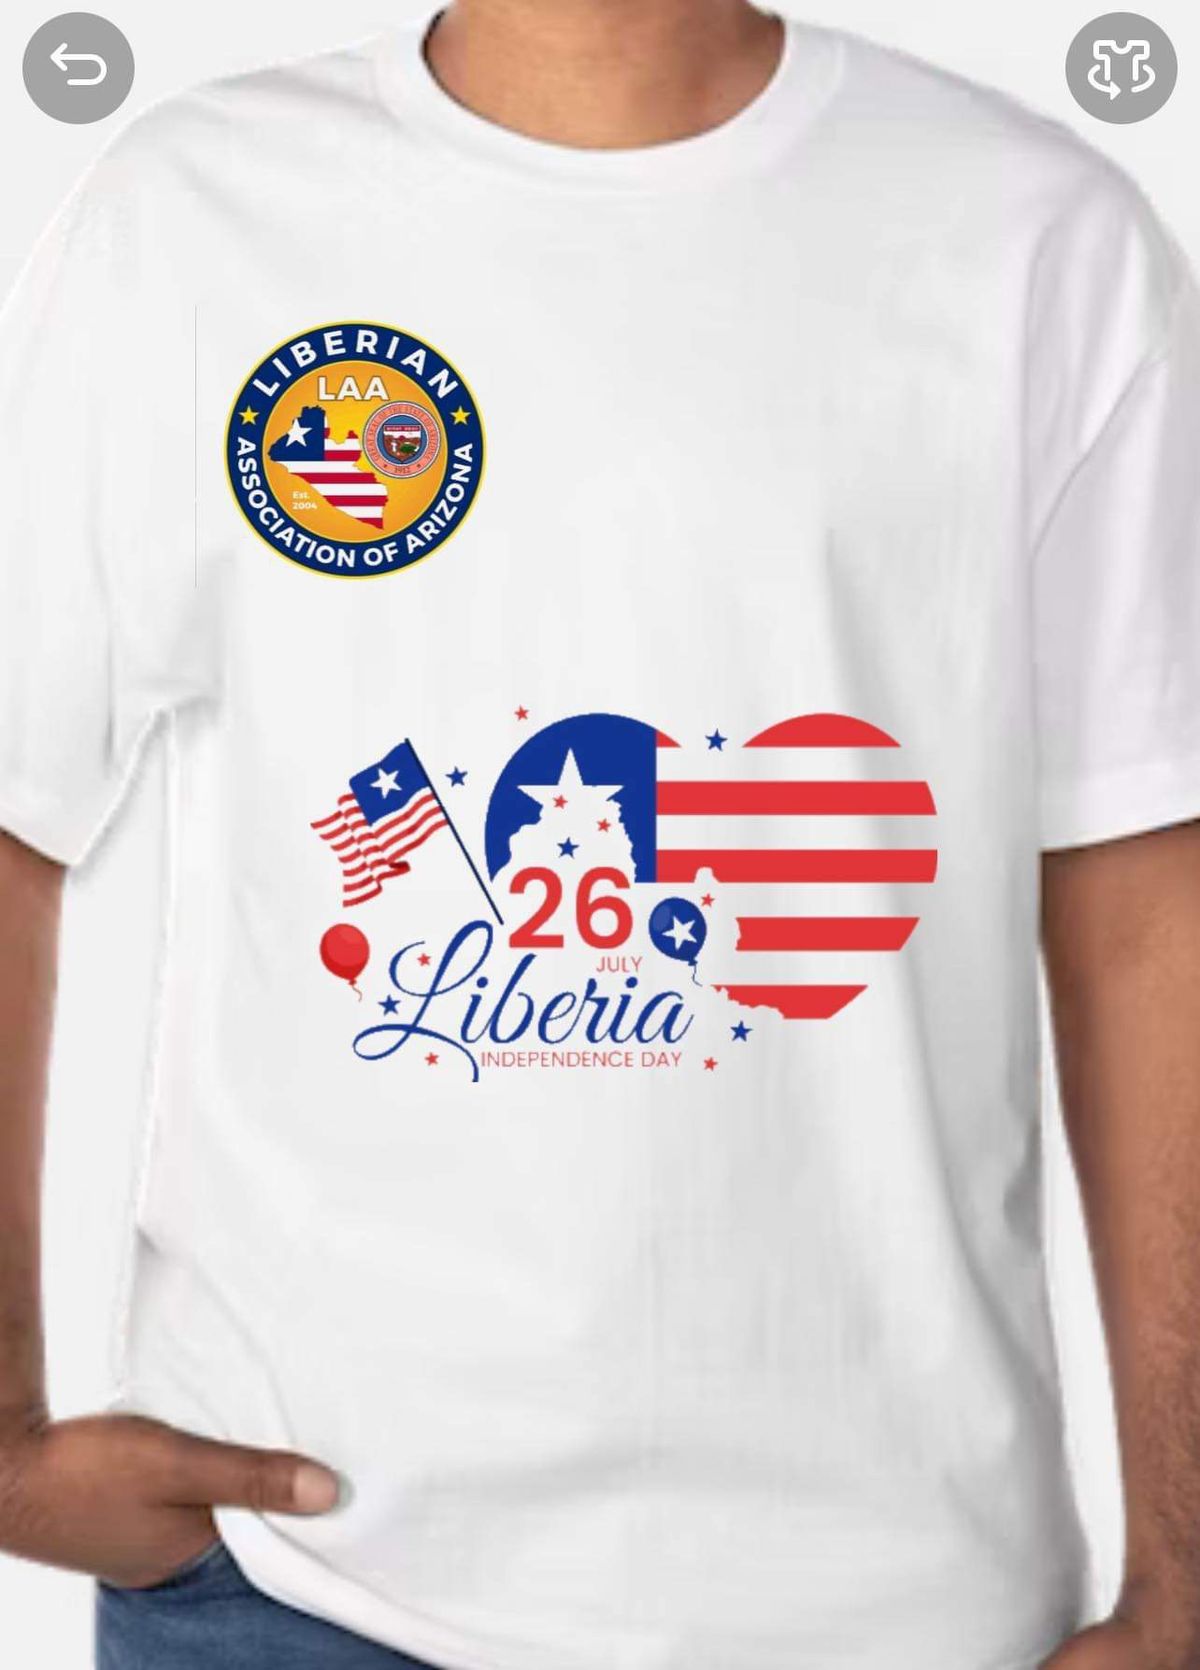 Liberia Association of Arizona's July 26 celebration